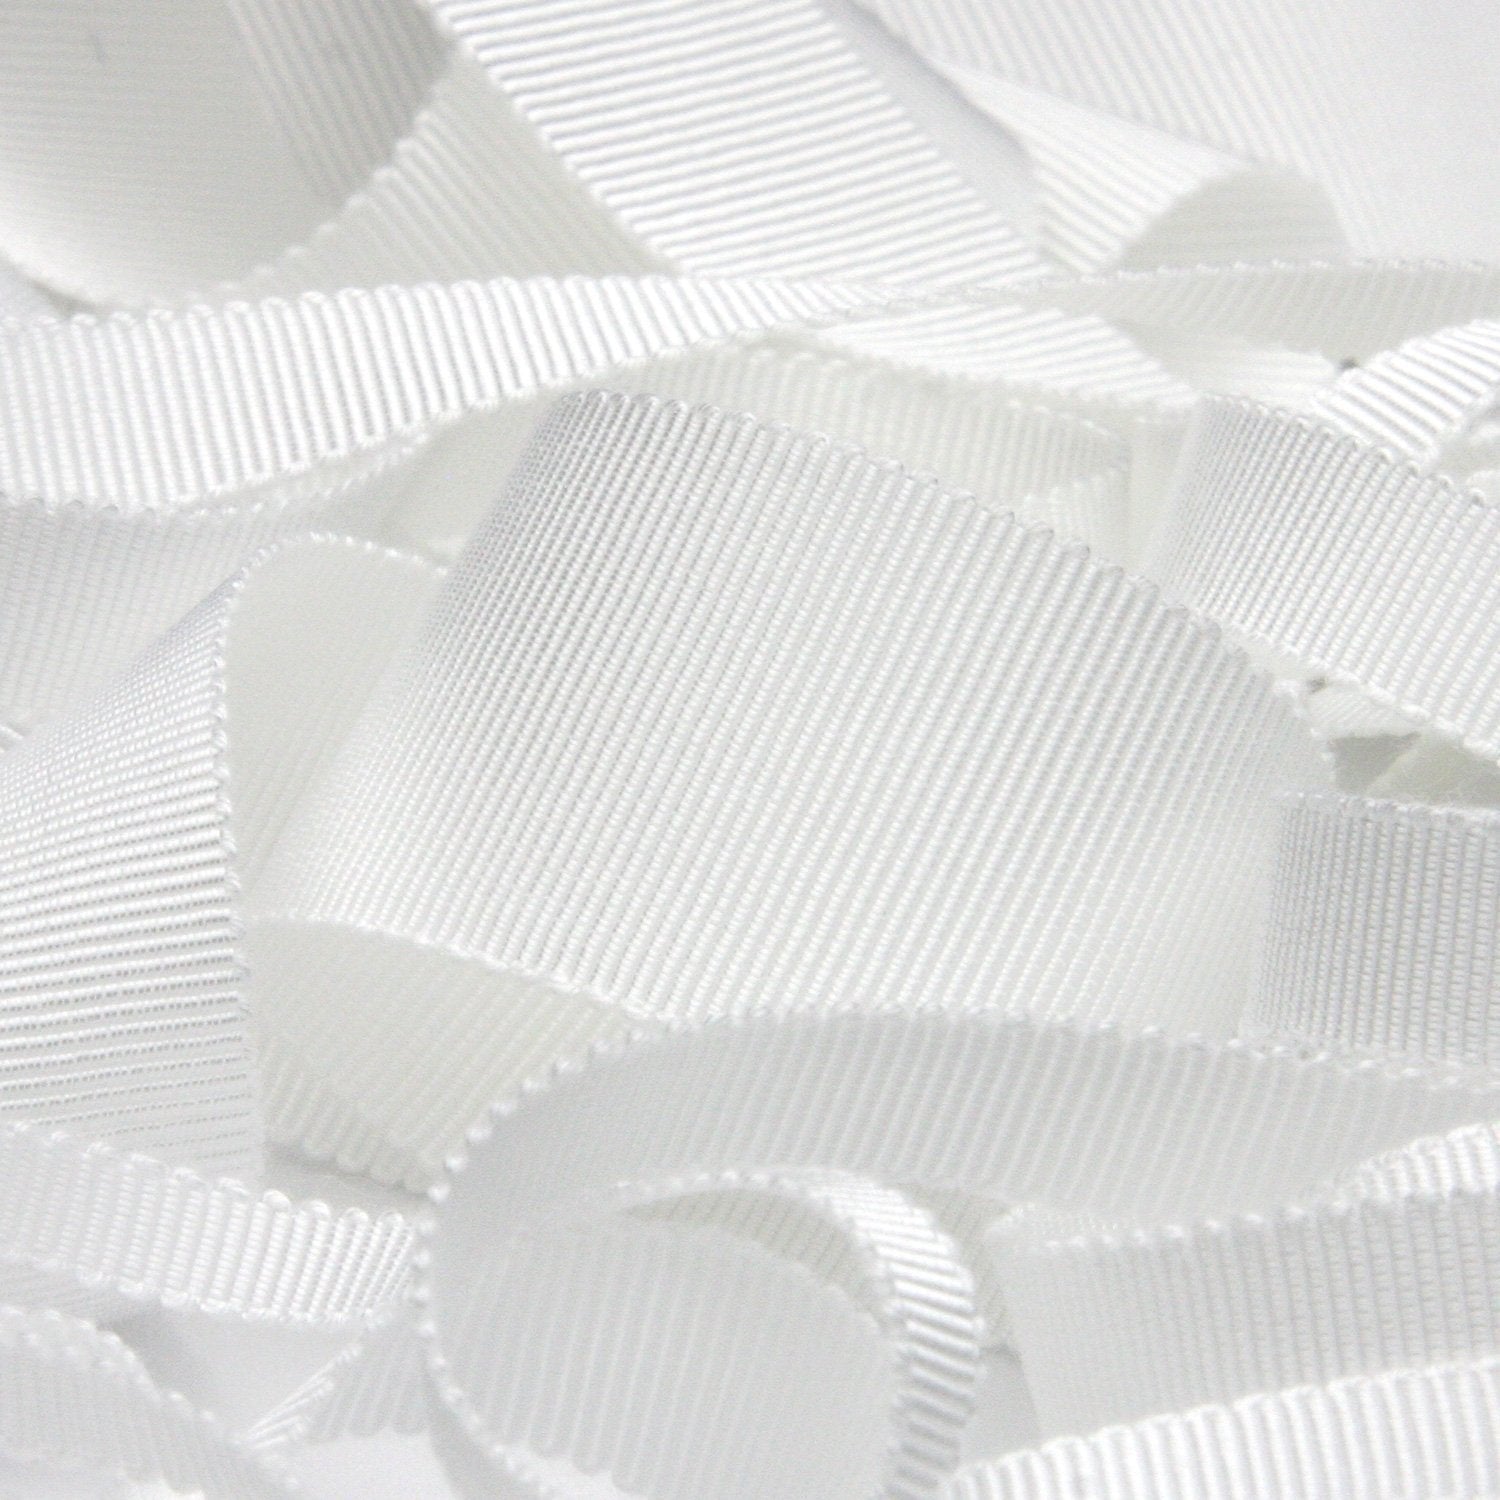 150.2 Organic cotton grosgrain ribbon ⅝ (15mm) undyed